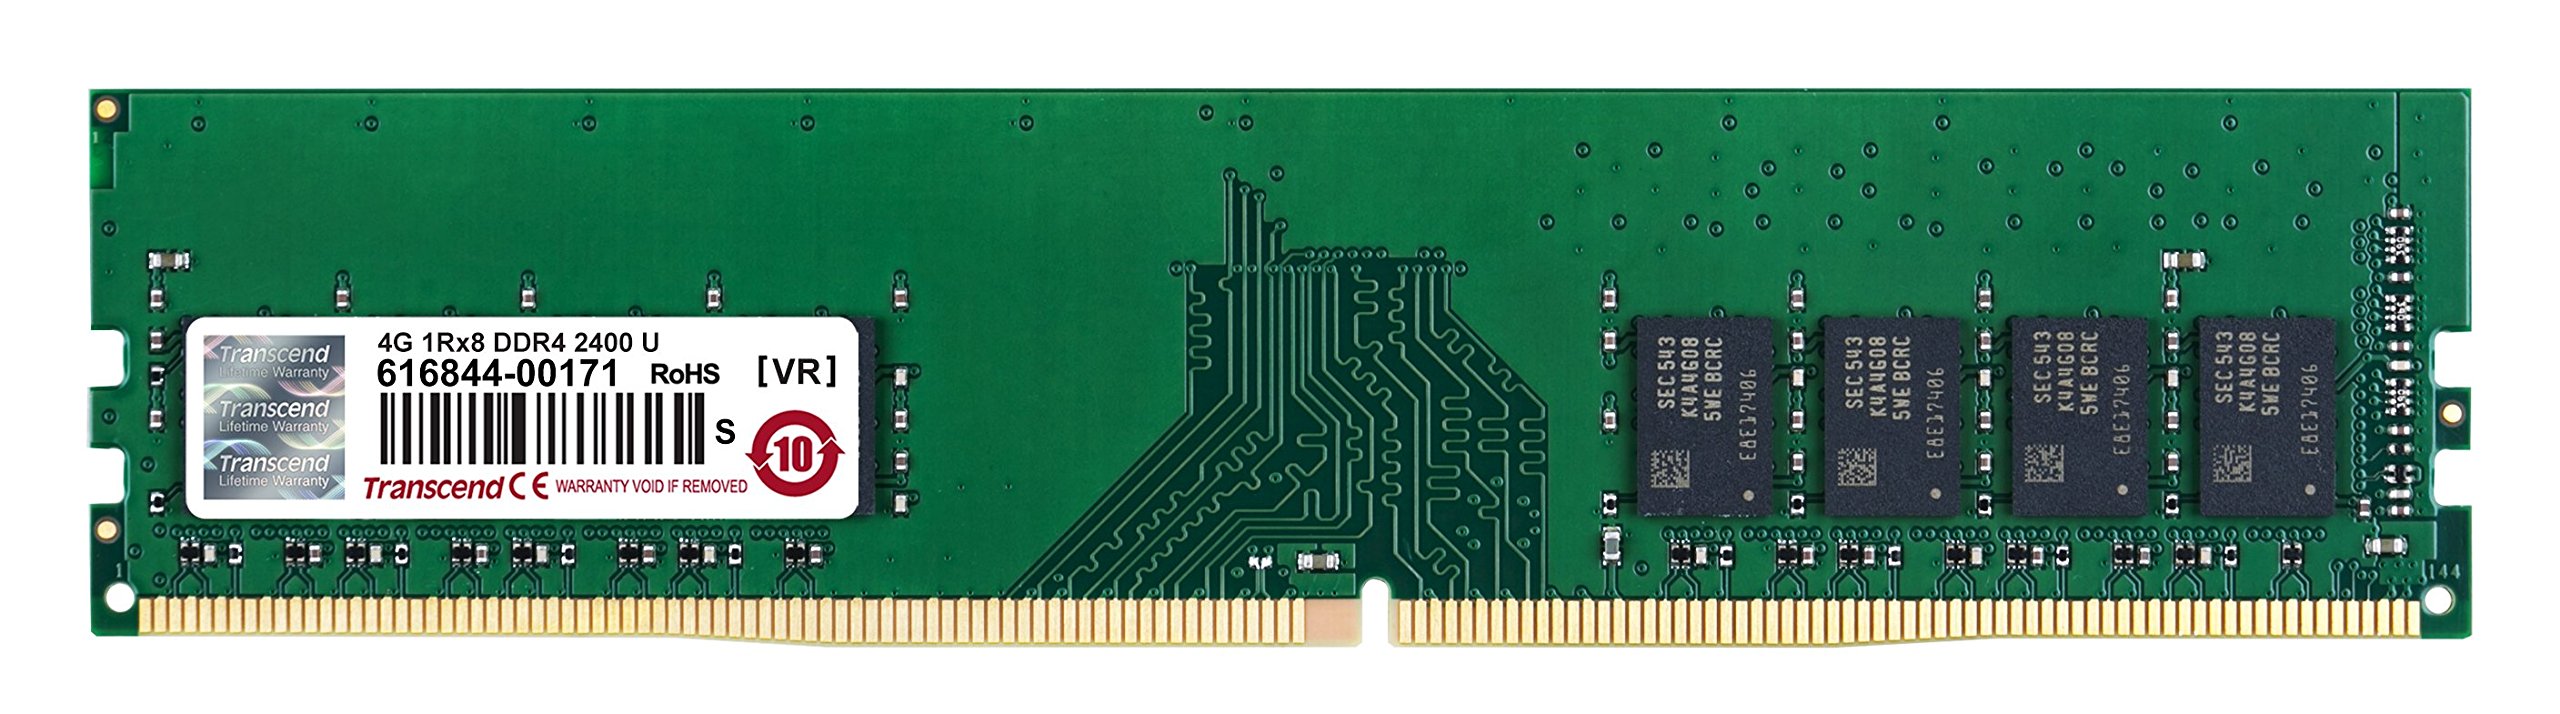 Transcend DDR4-3200 Unbuffered Long-DIMM